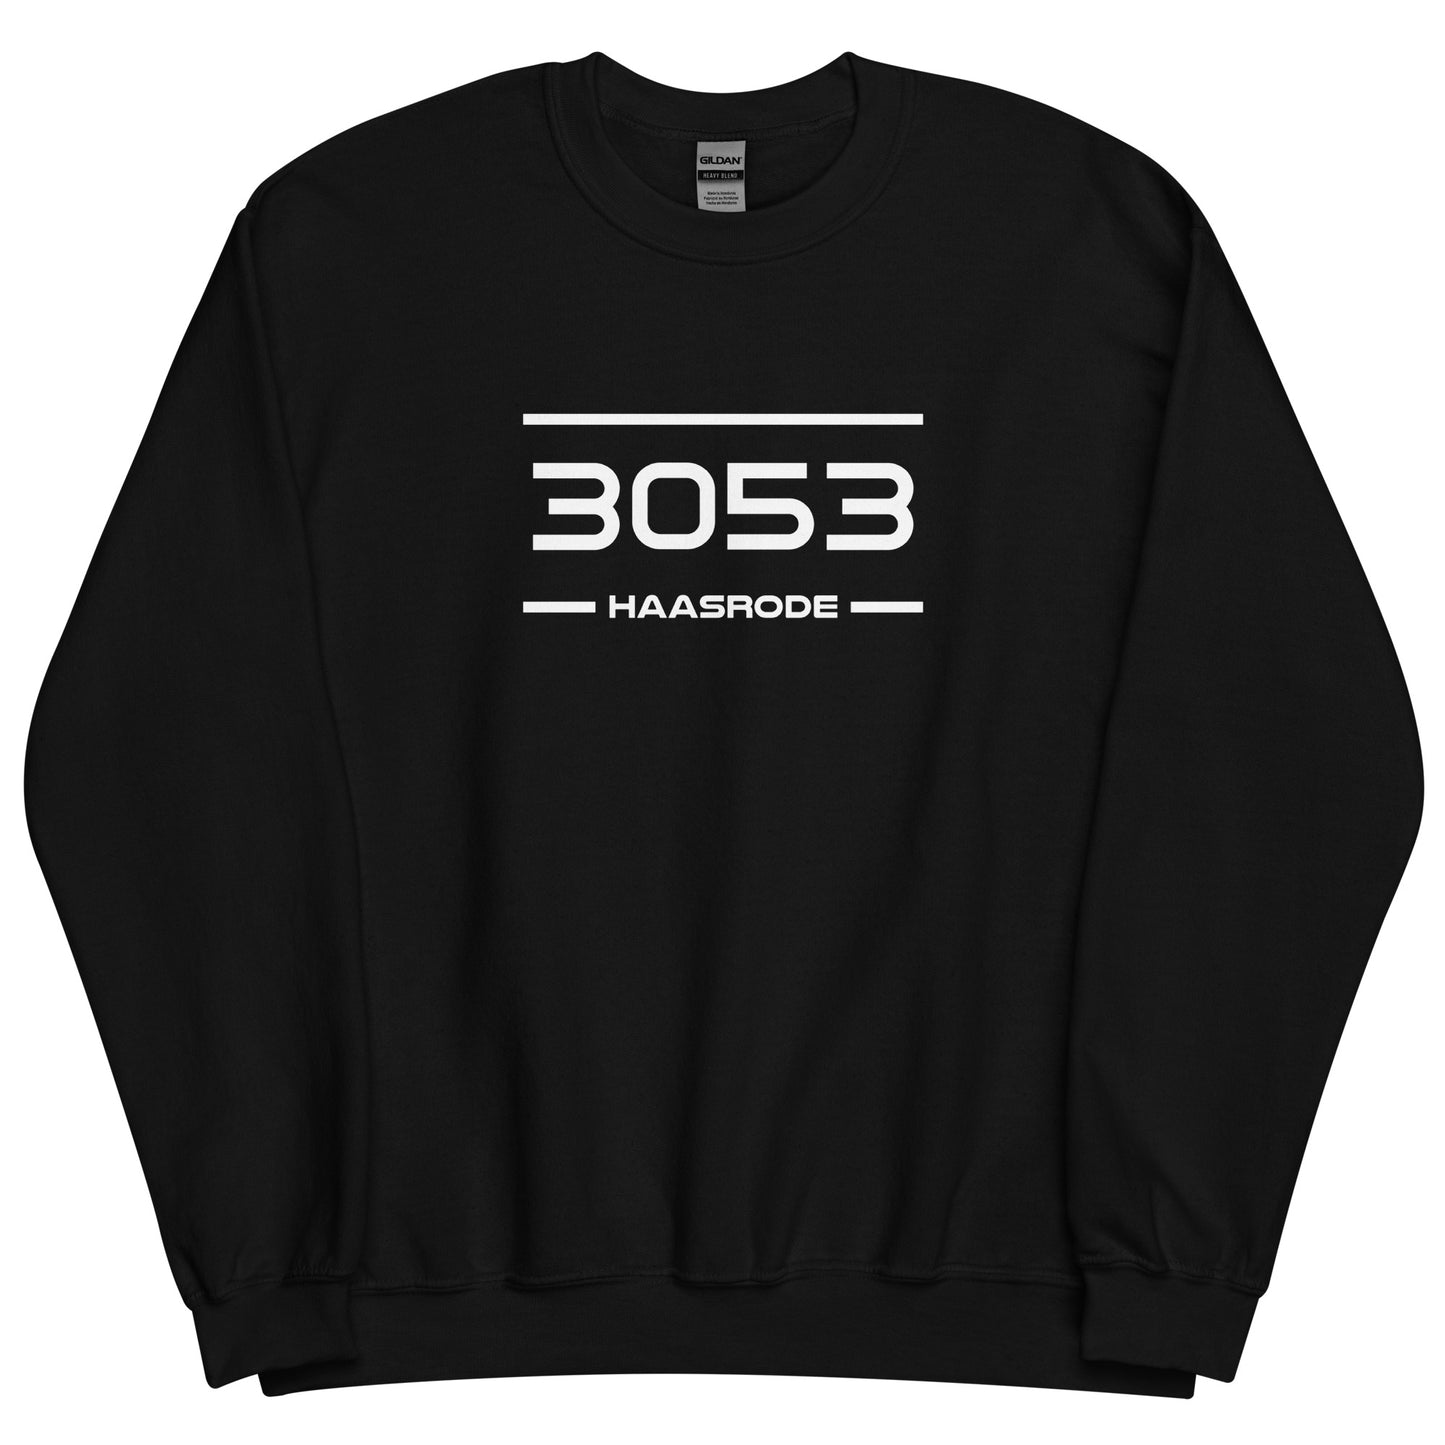 Sweater - 3053 - Haasrode (M/V)